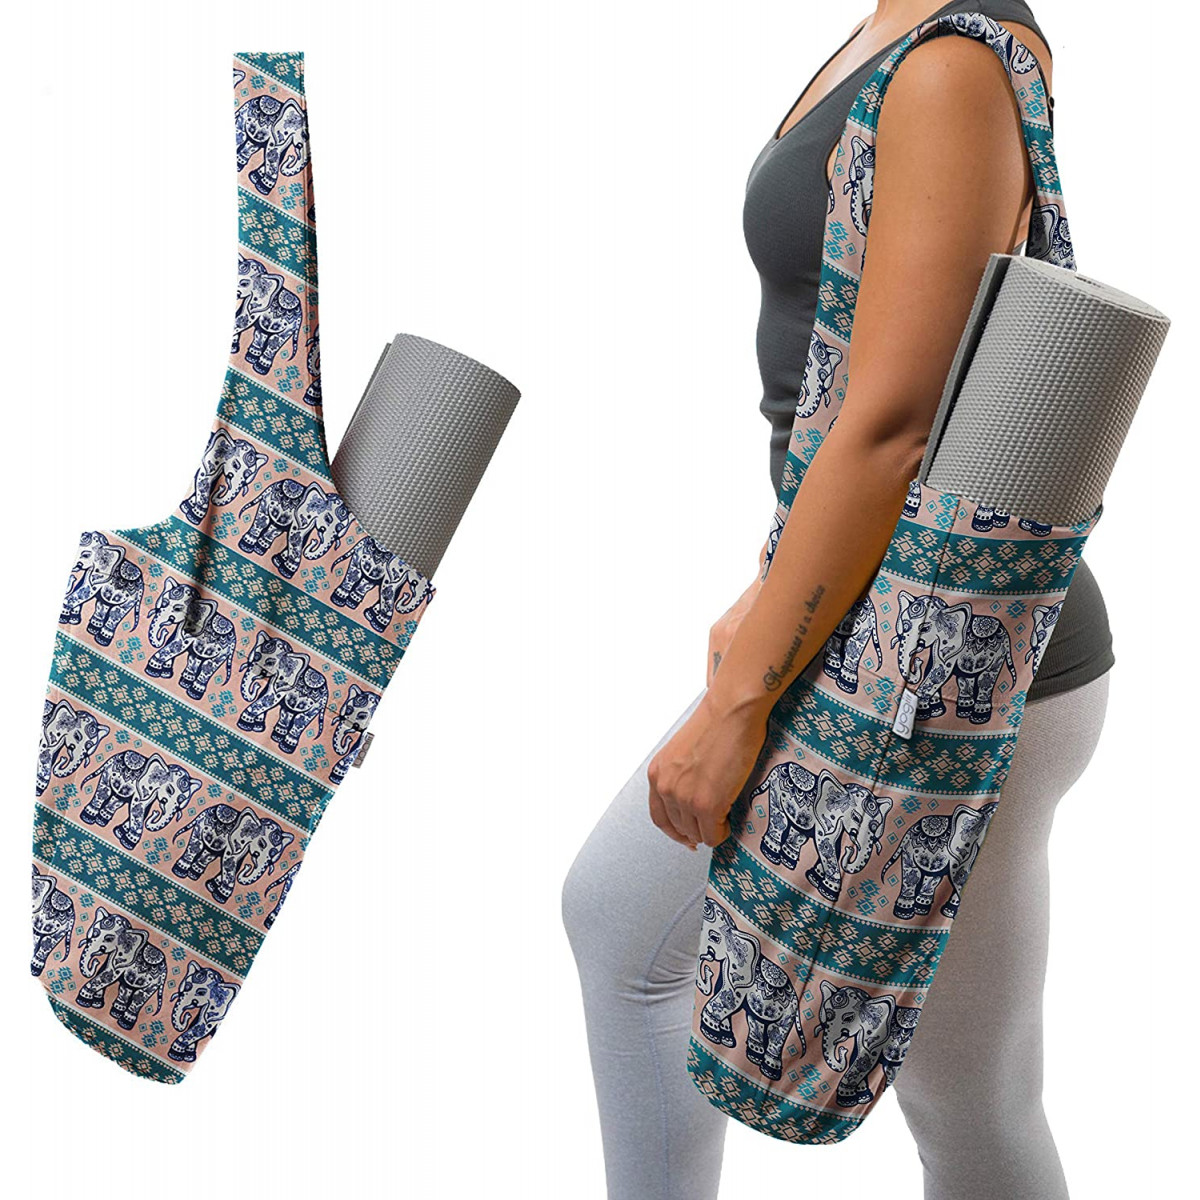 Yogiii Yoga Mat Bag, The Original YogiiiTote